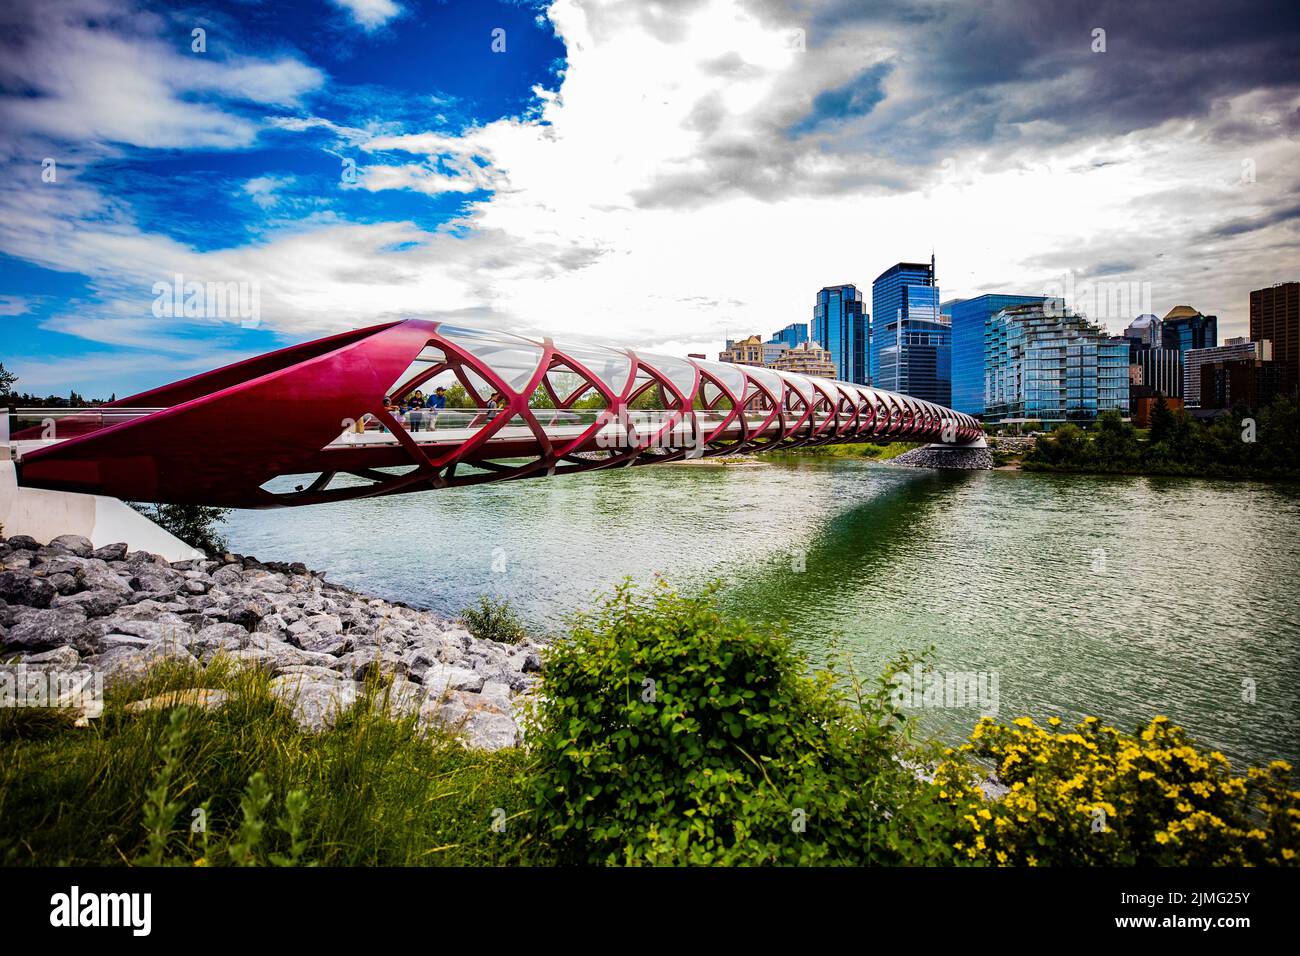 A vibrant cityscape of the red Peace Bridge over Bow River in Calgary, Alberta, Canada Stock Photo